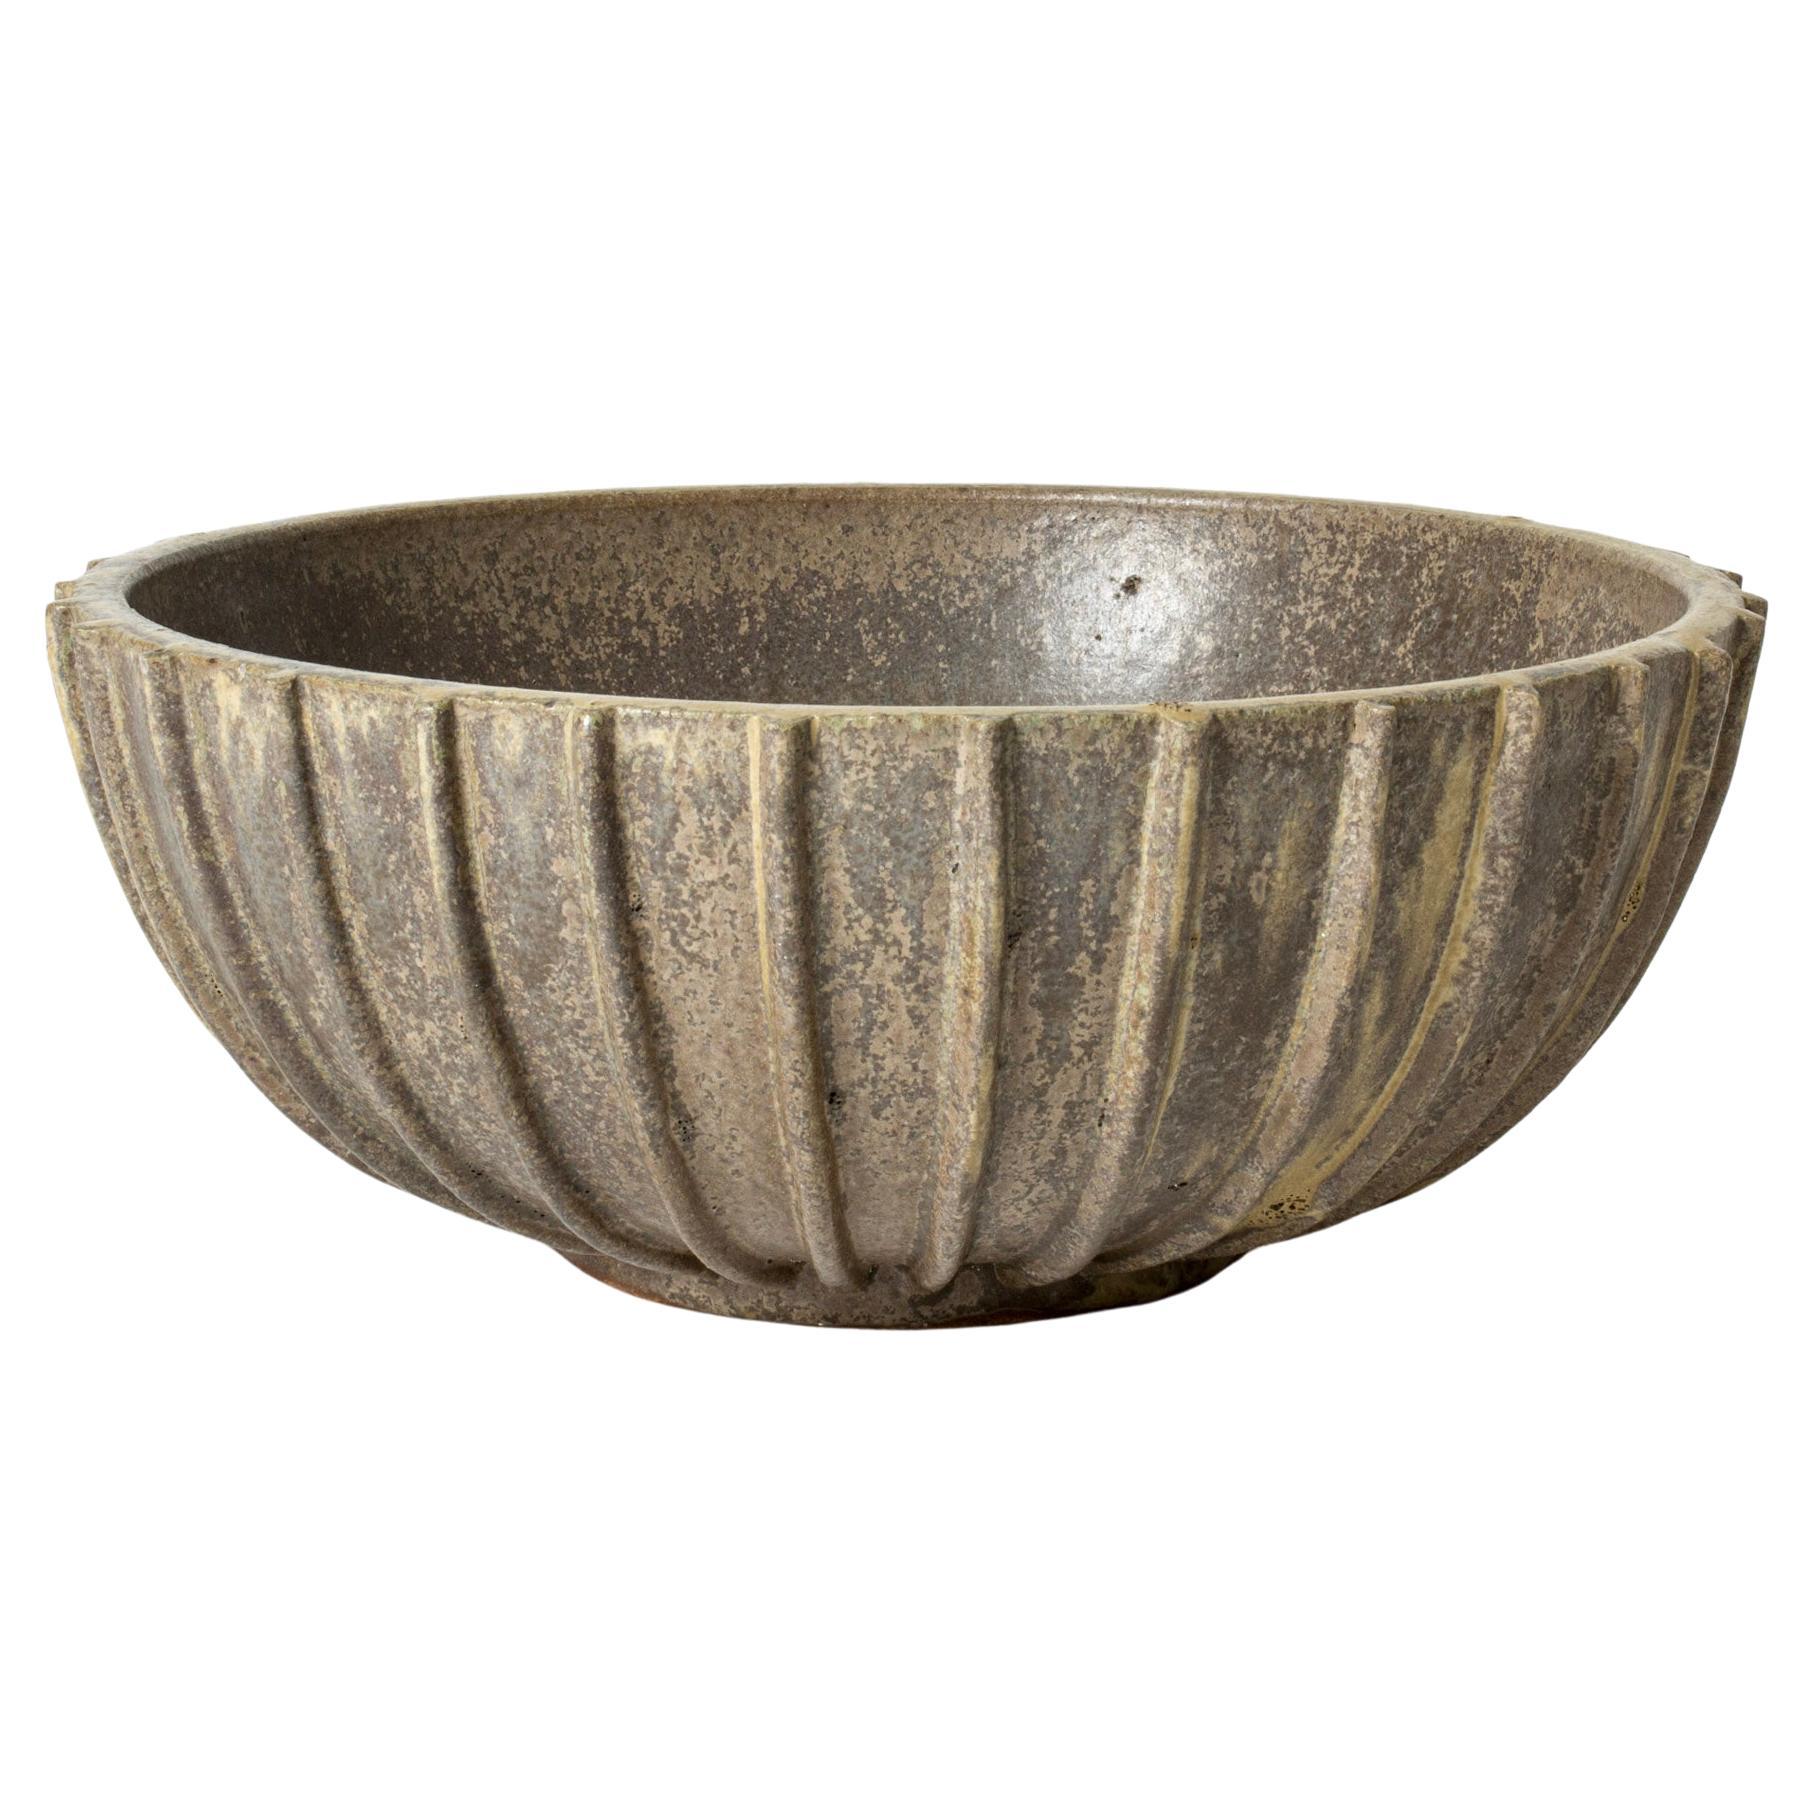 Vintage Modernist stoneware bowl by Arne Bang, Denmark, 1940s